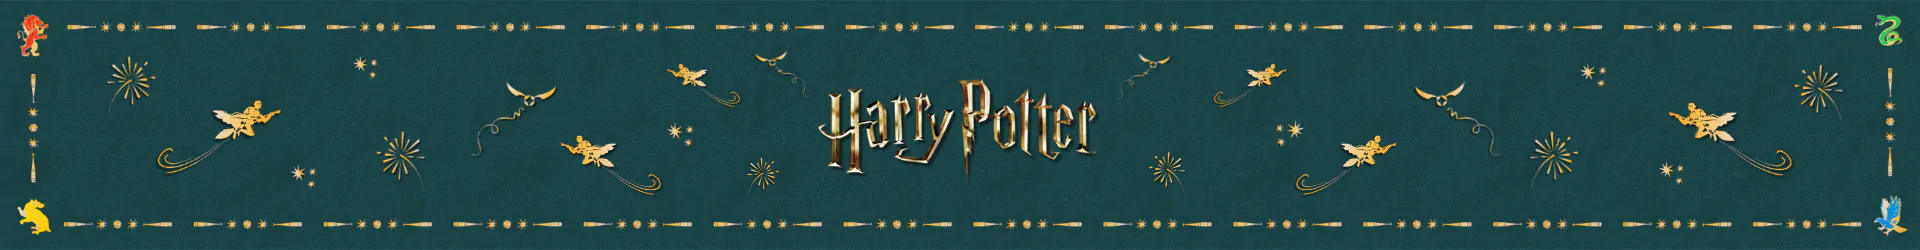 Harry Potter replicas banner